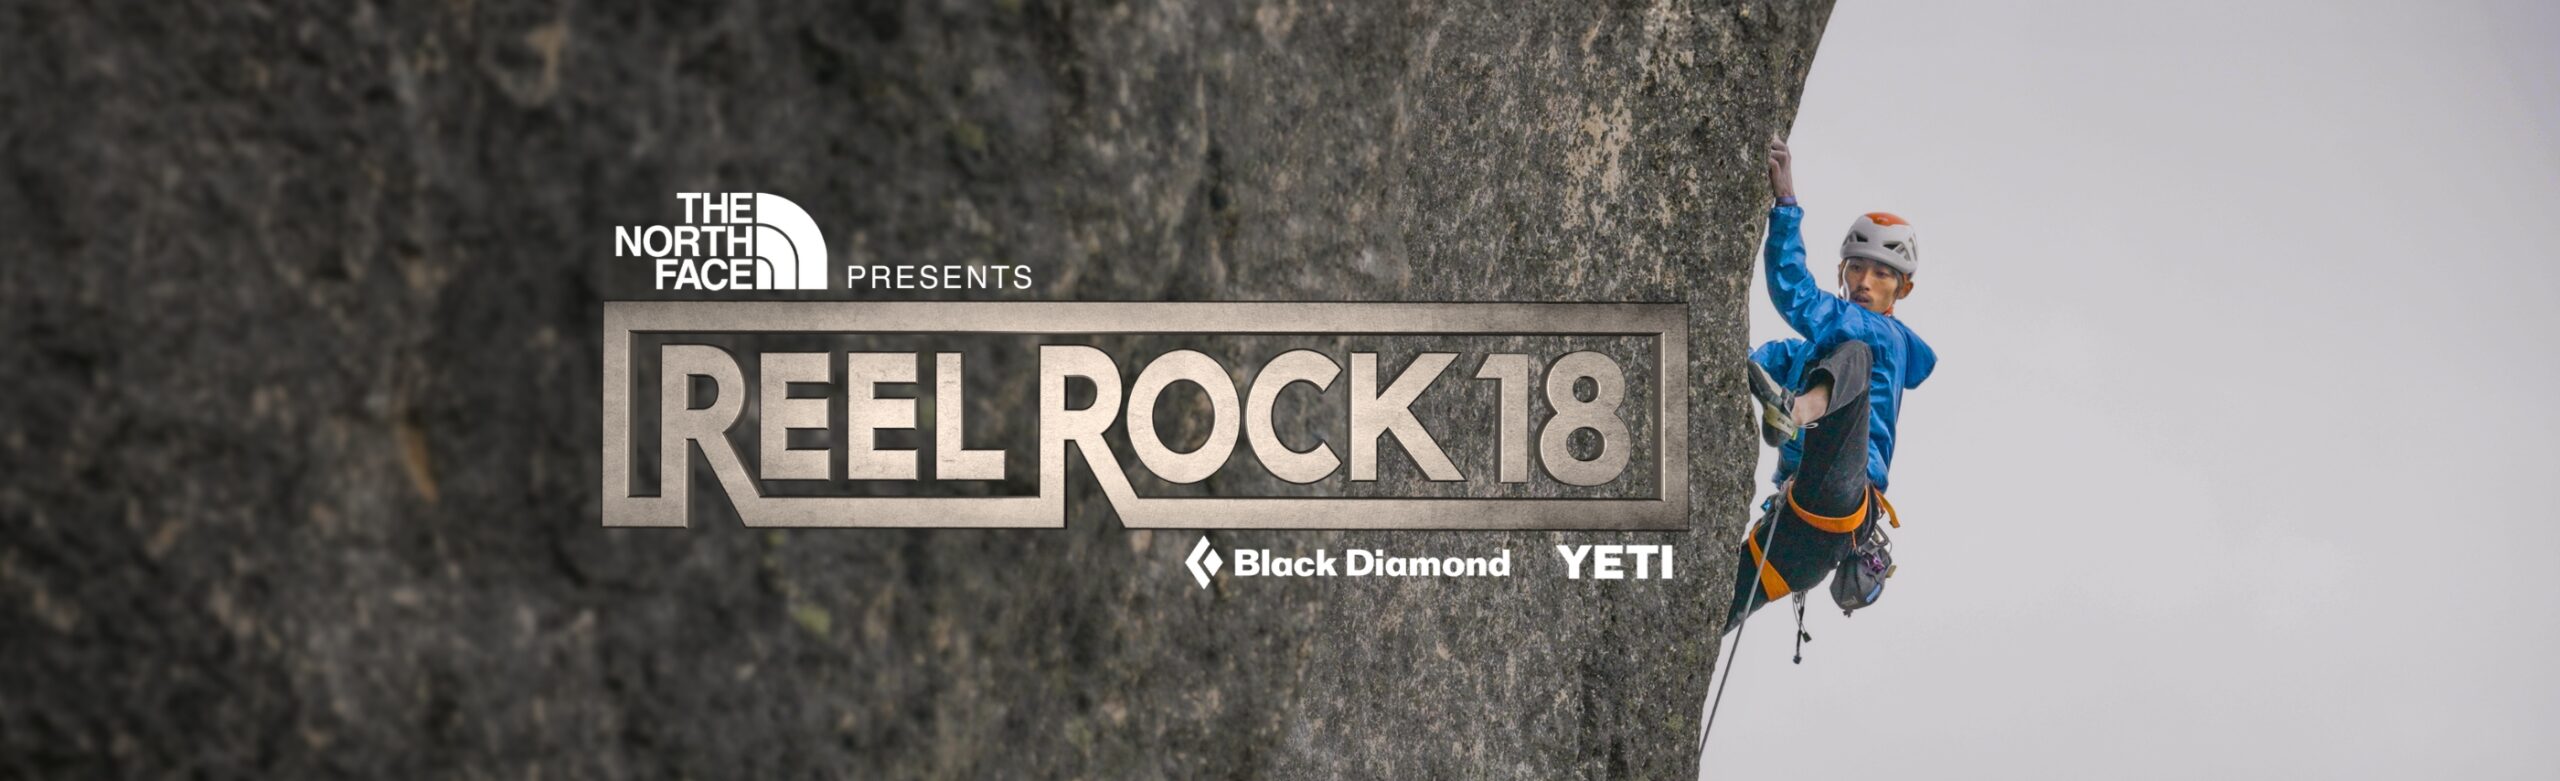 Reel Rock 18 - Logjam Presents